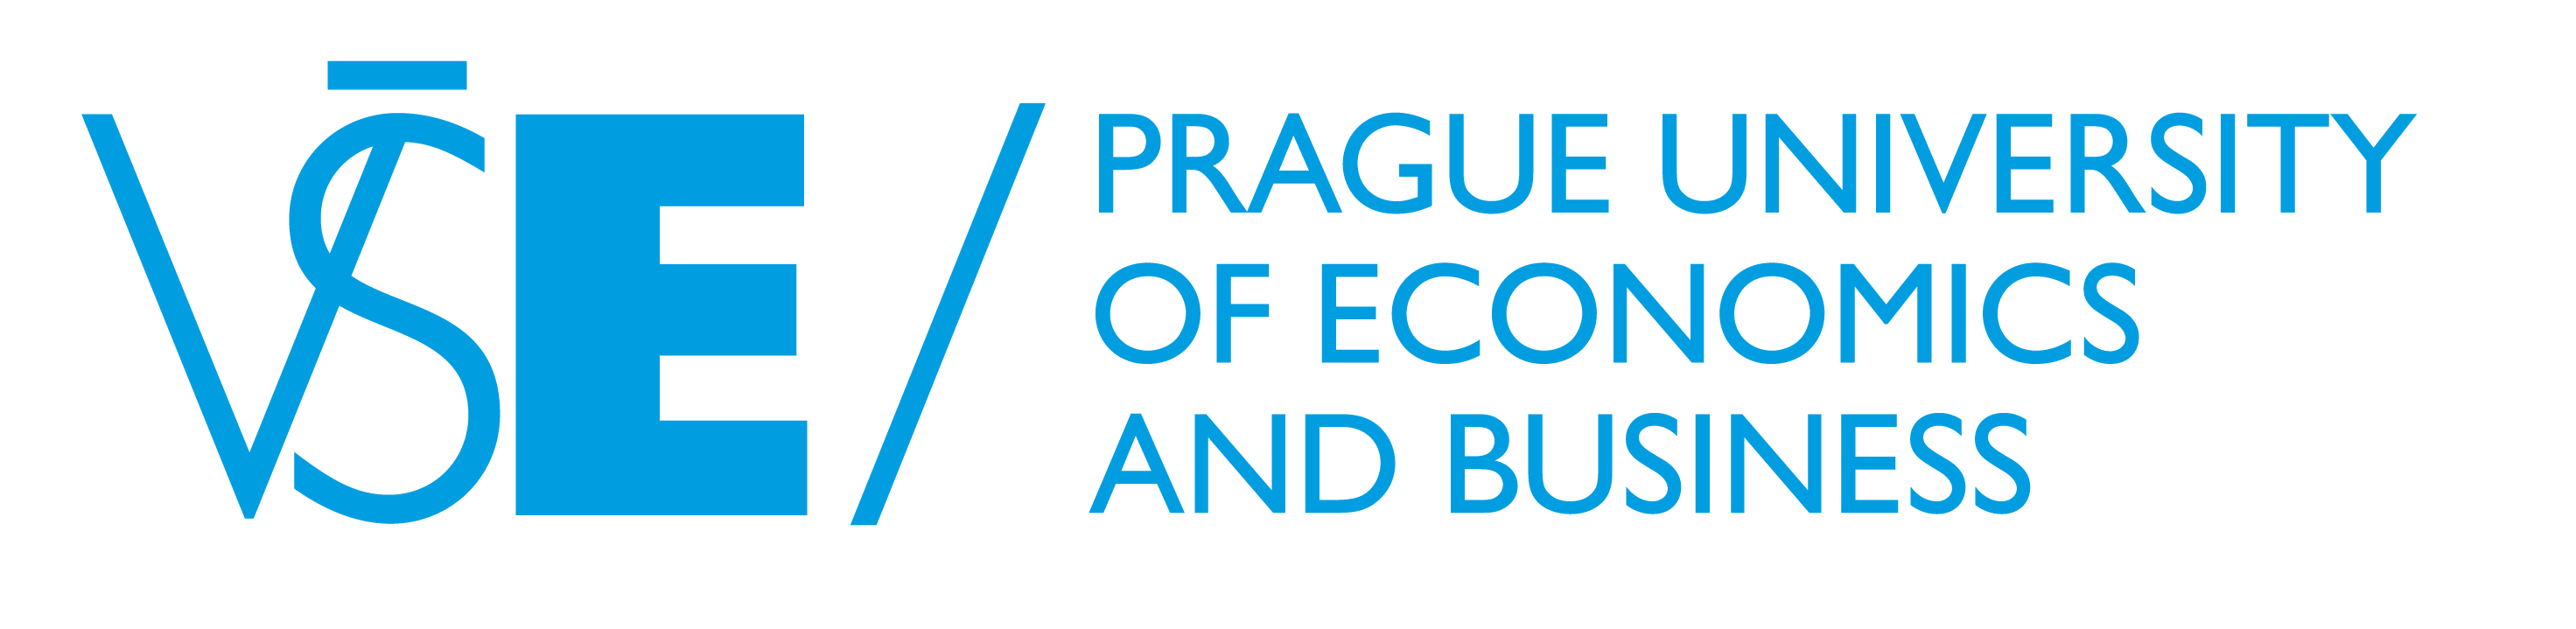 VŠE - logo blue - horizontal - English